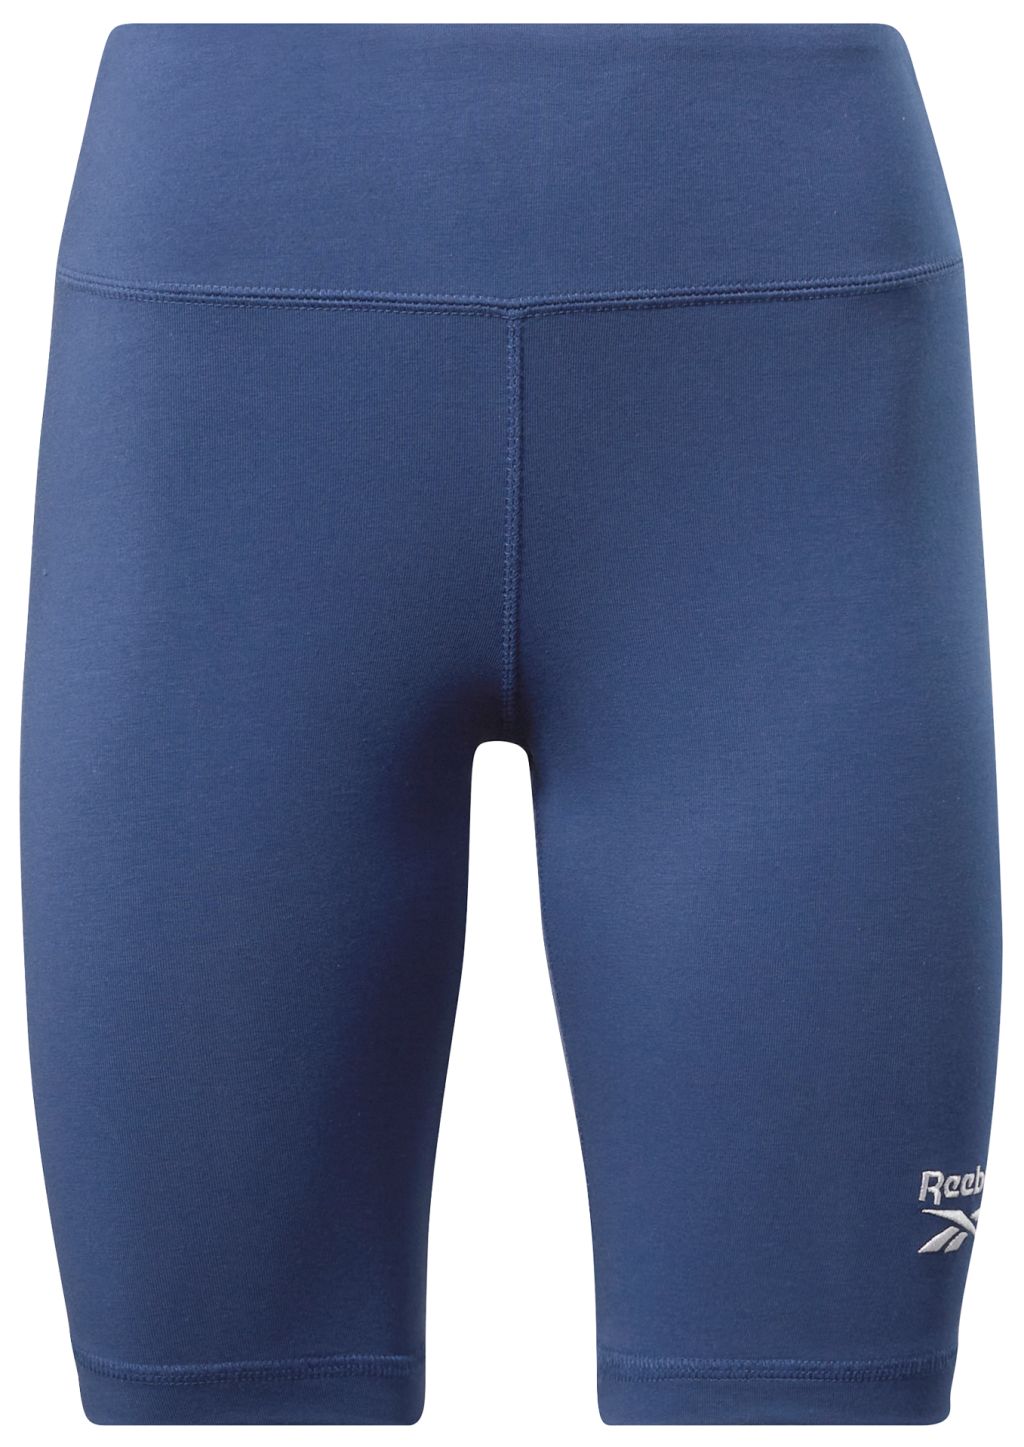 Women\'s shorts Reebok Tennis - Fitted RI blue | Zone Tennis Short | batik Shop SL